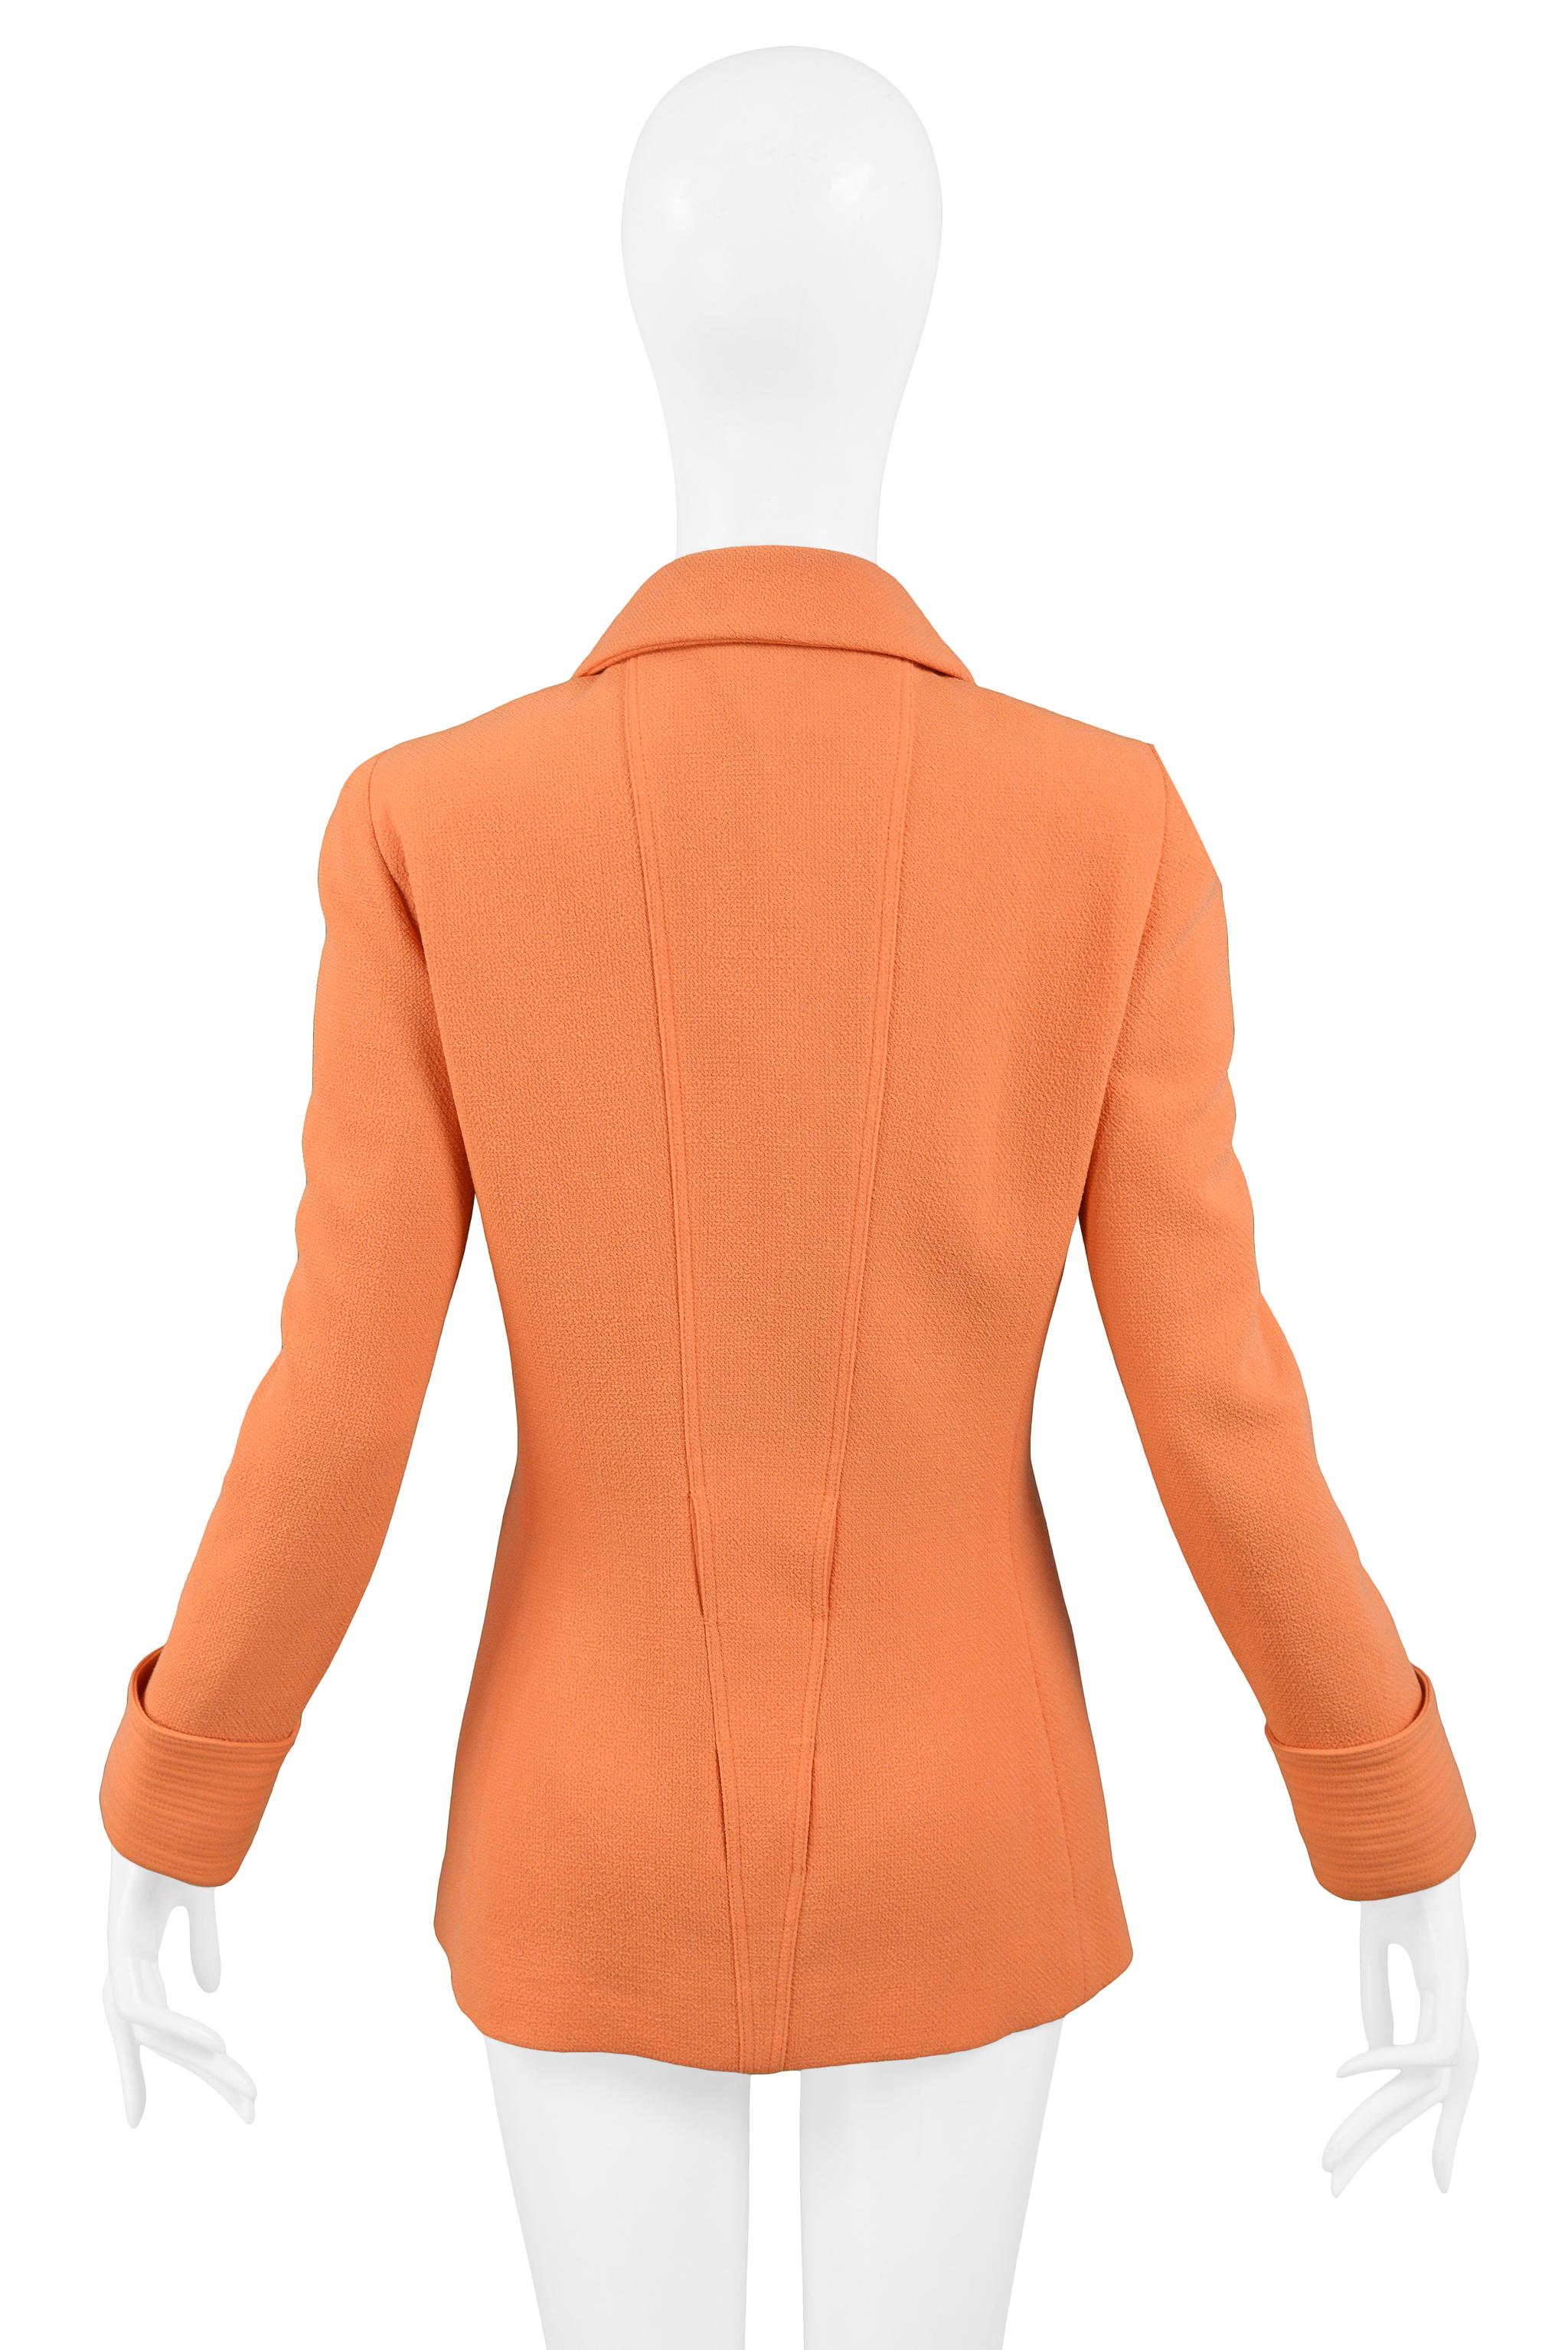 Women's Vintage Versace Orange Blazer Jacket 1991 For Sale